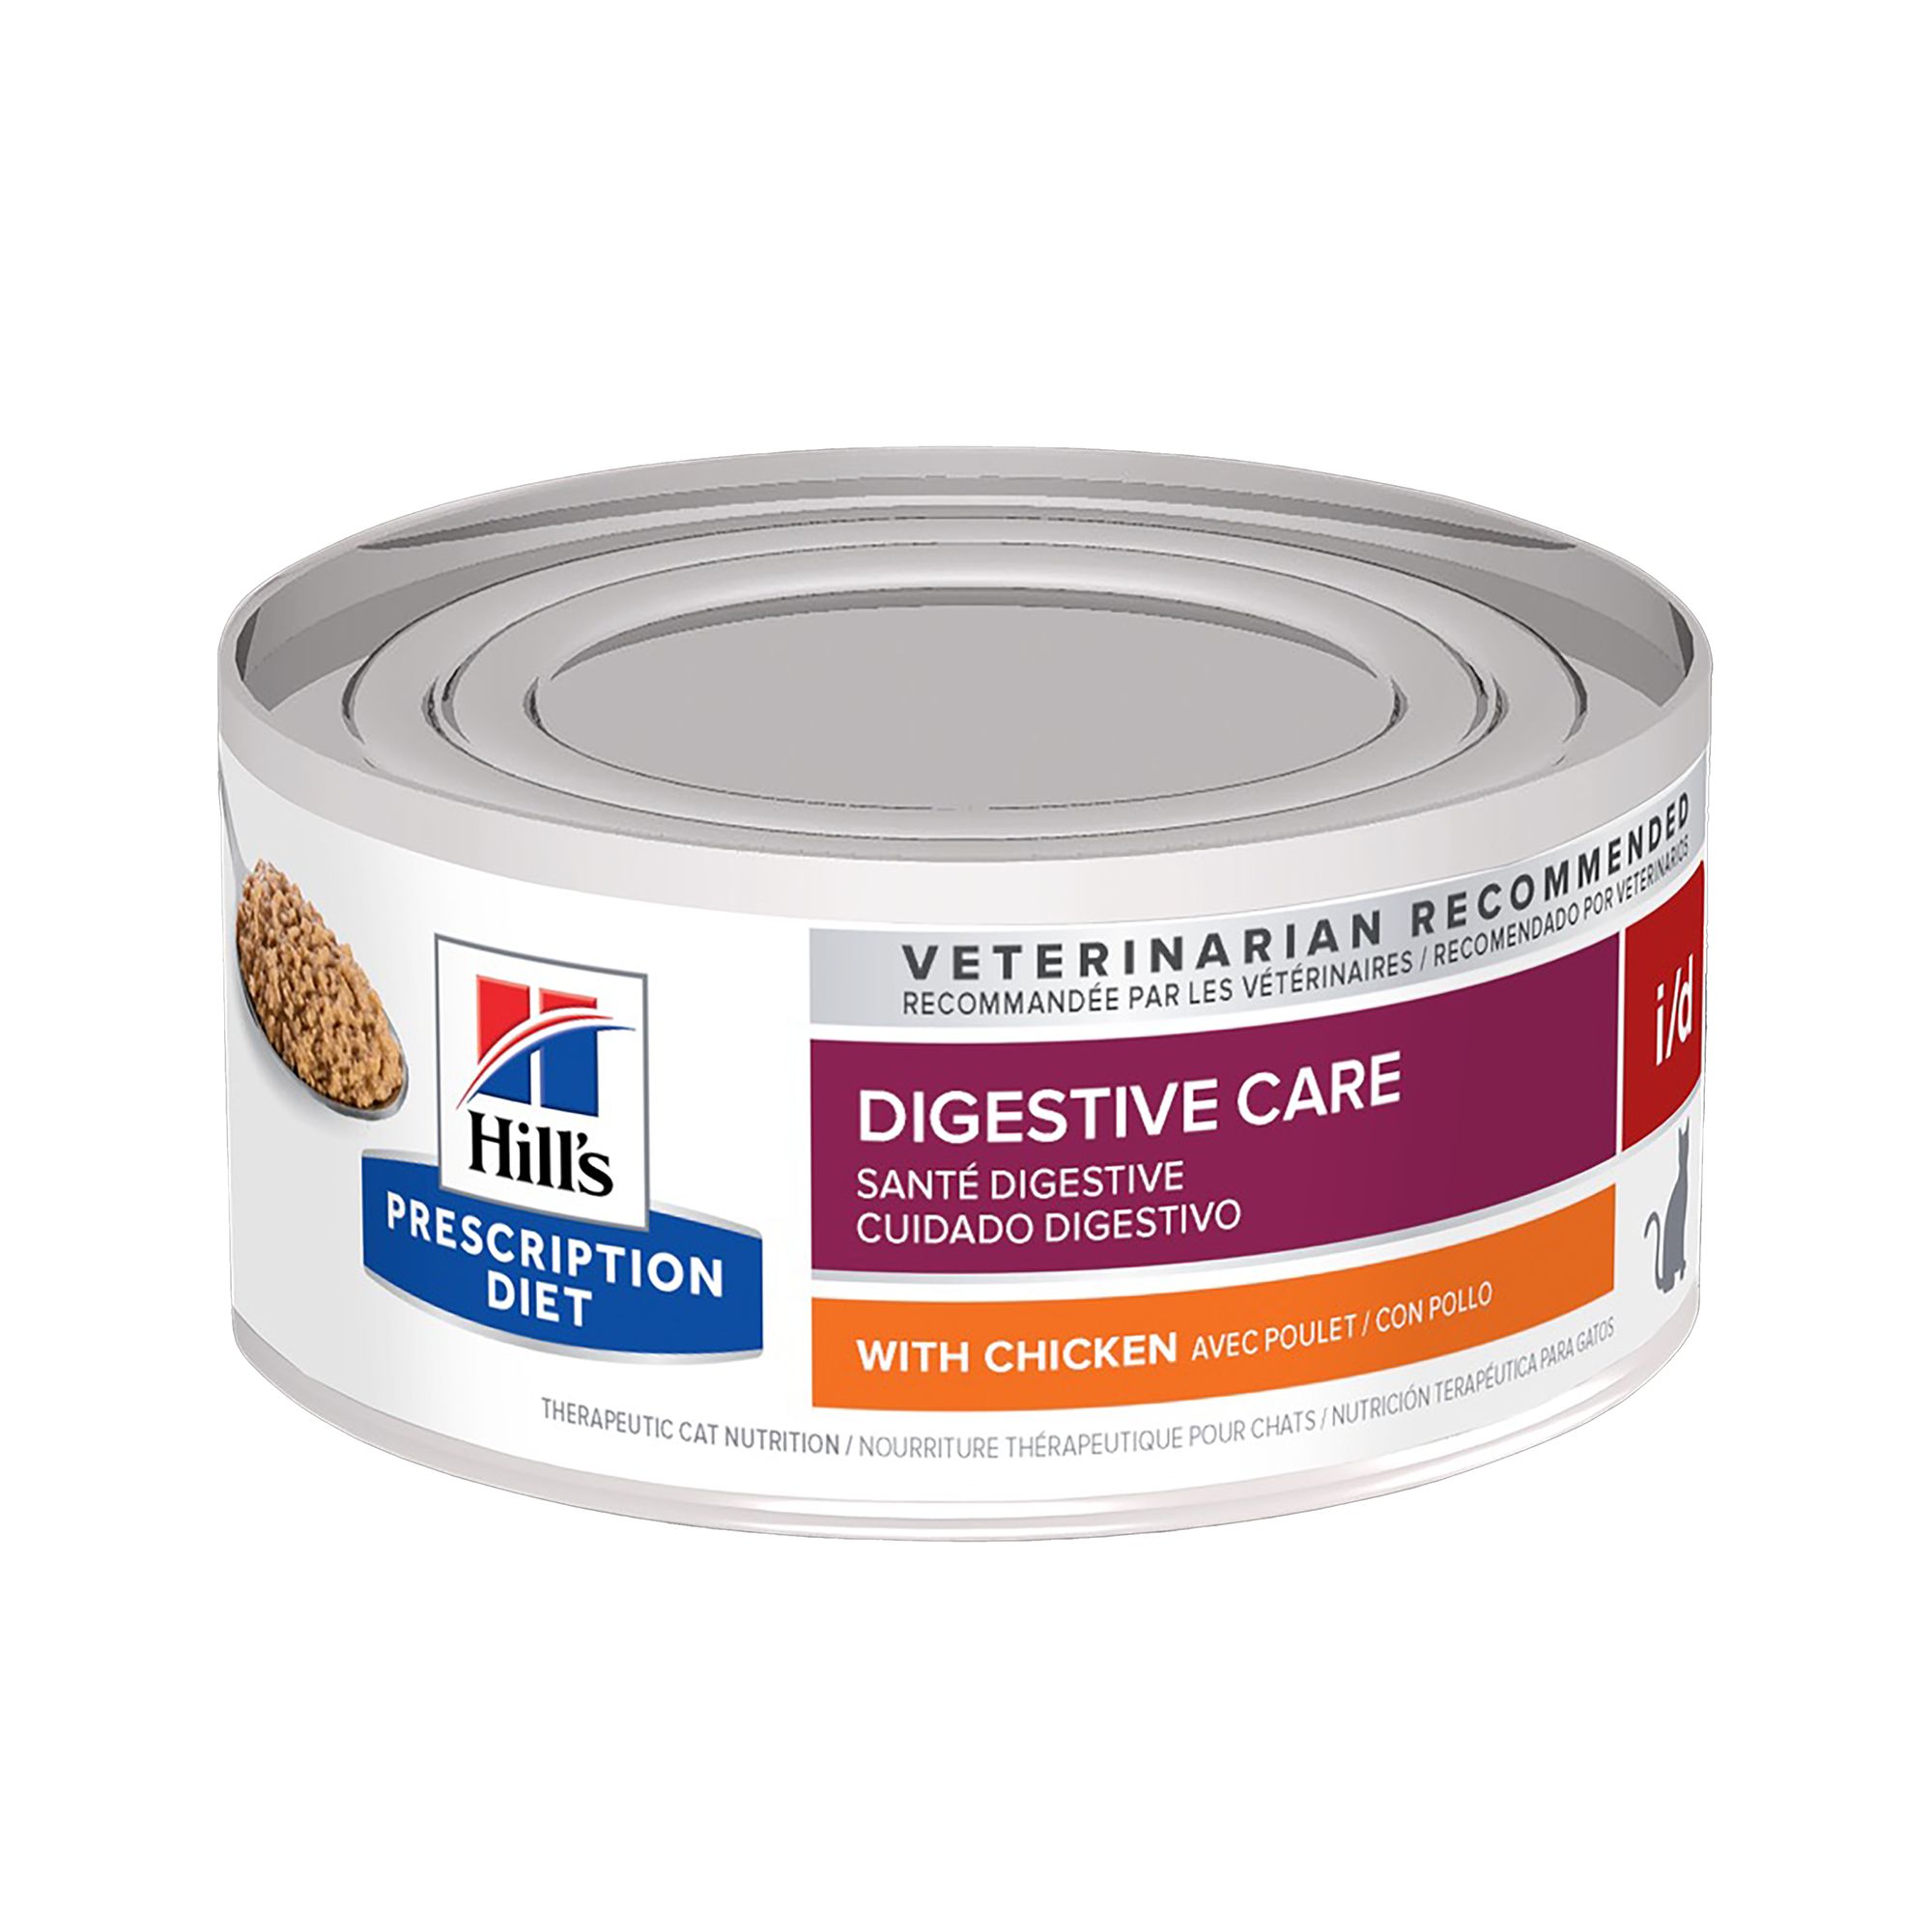 digestive care cat food